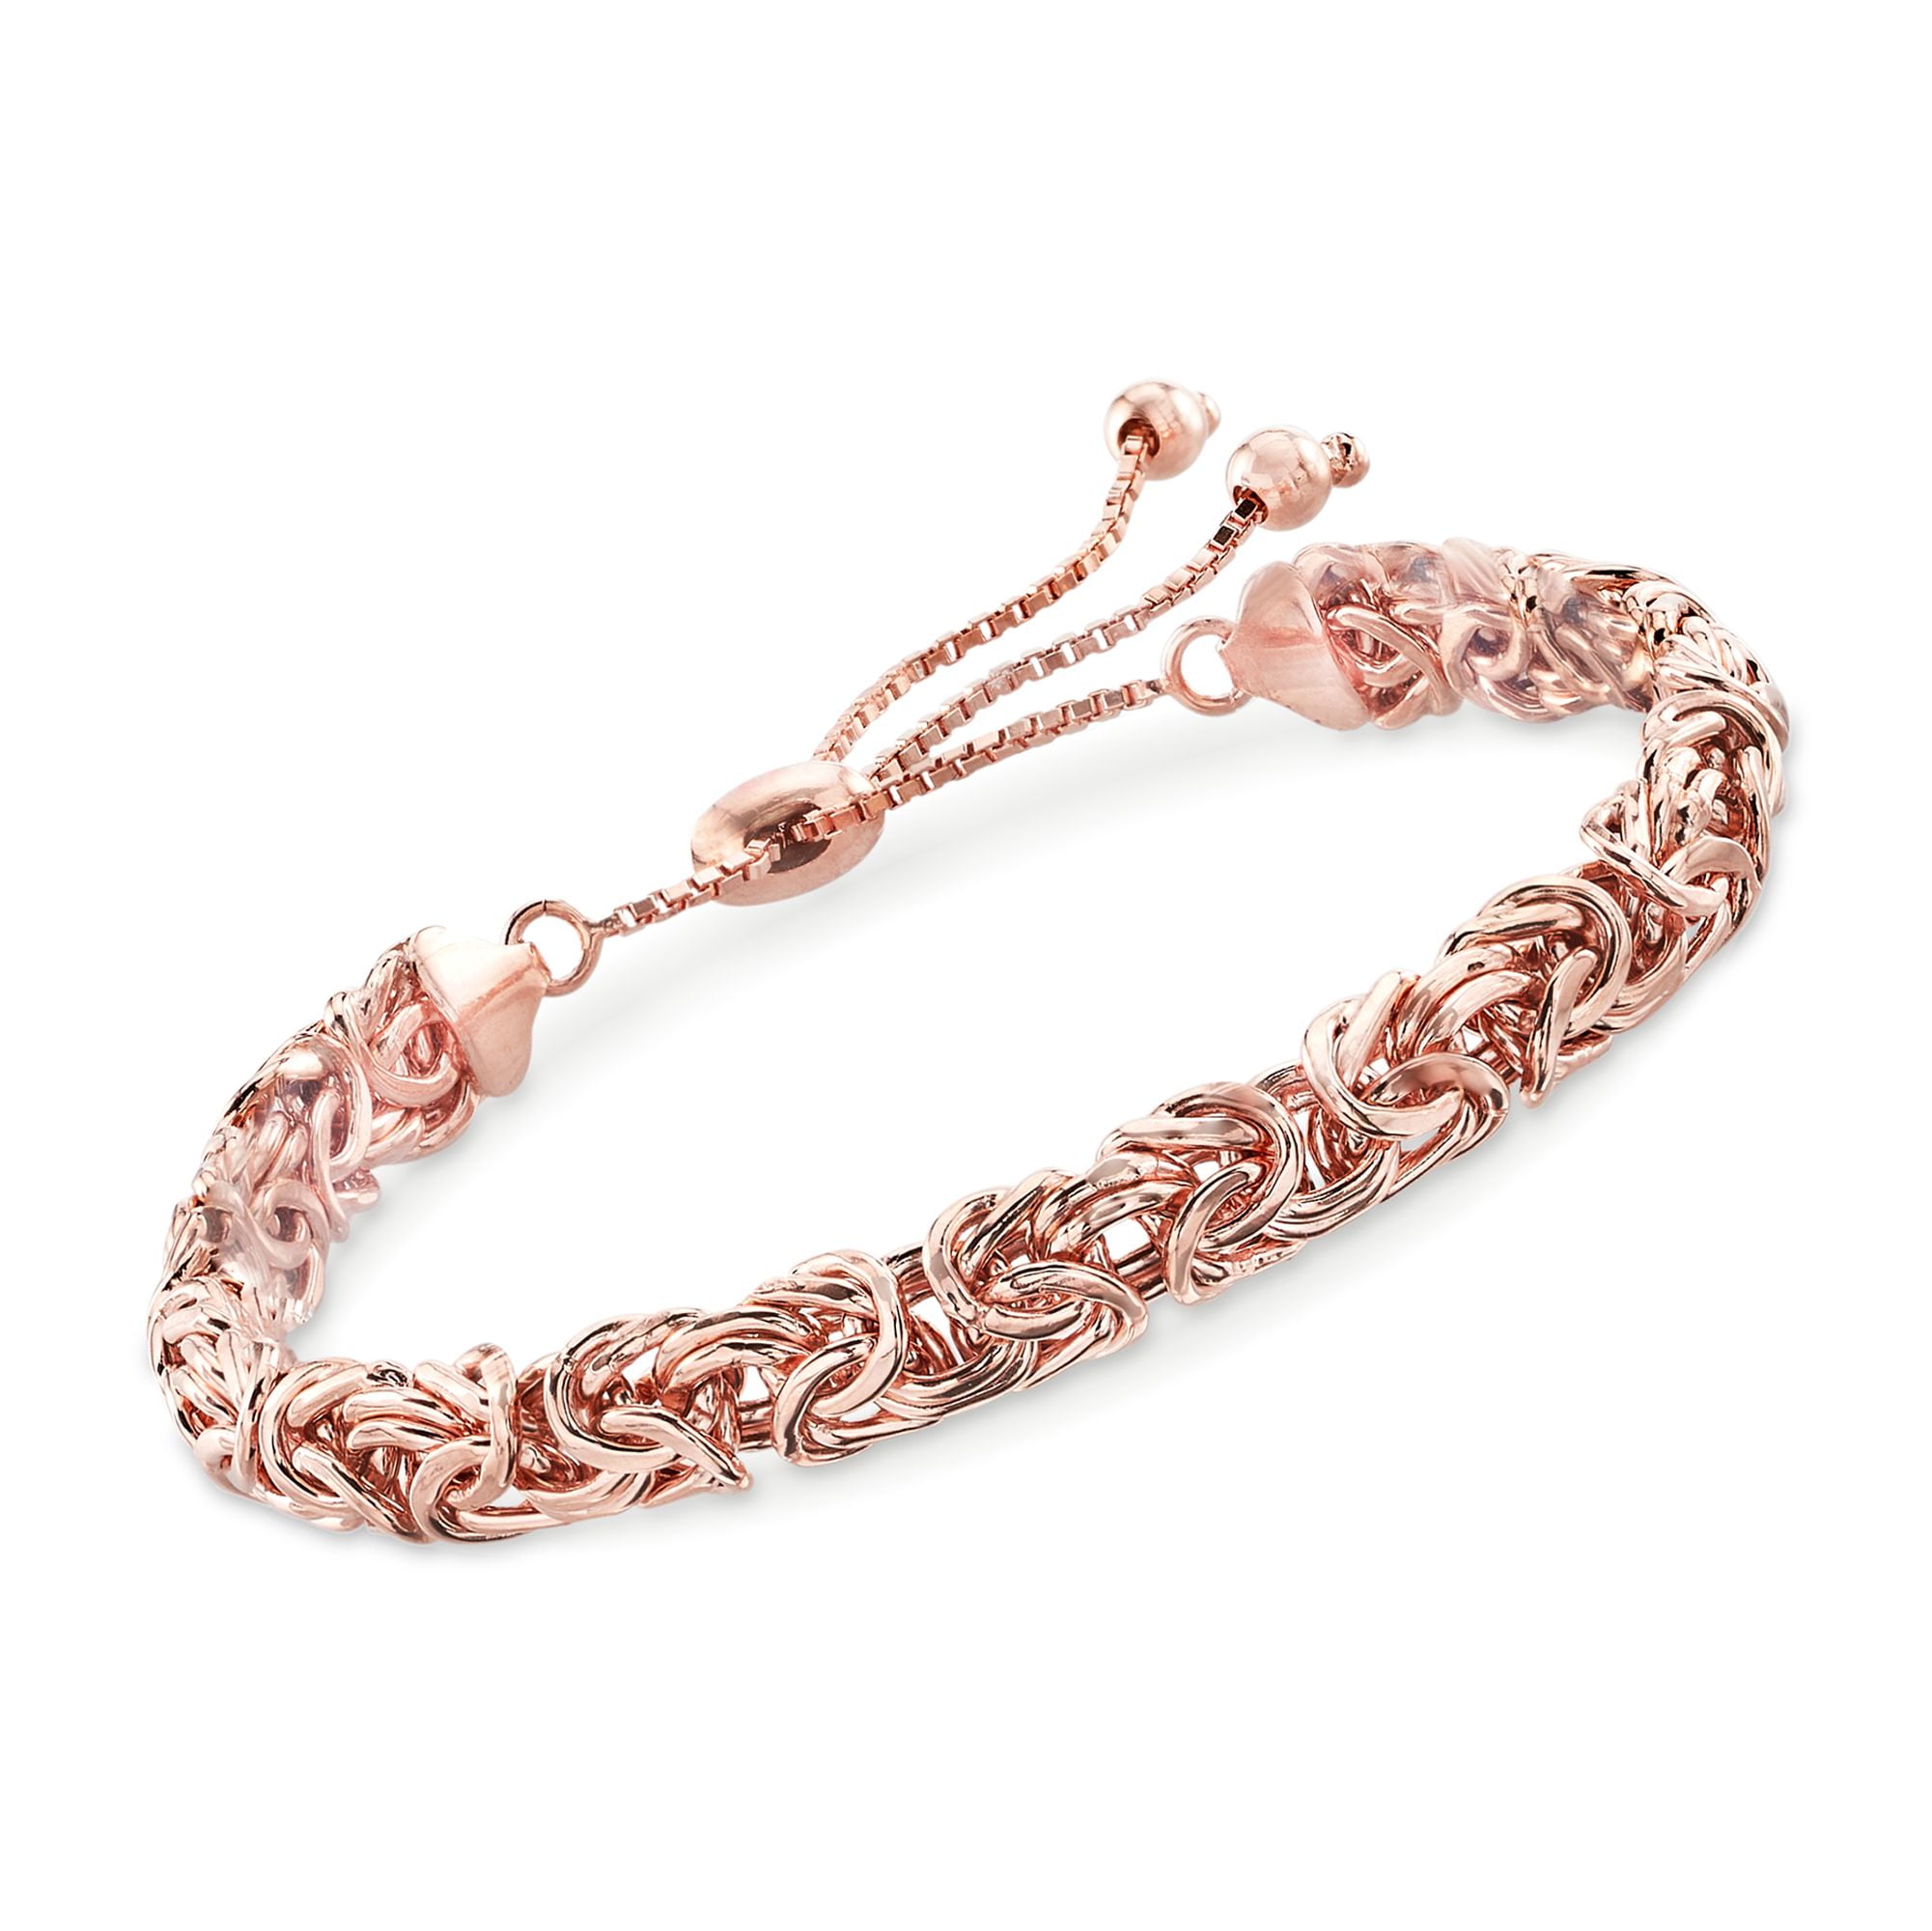 Adjustable length. 100% Copper Byzantine Chain Bracelet